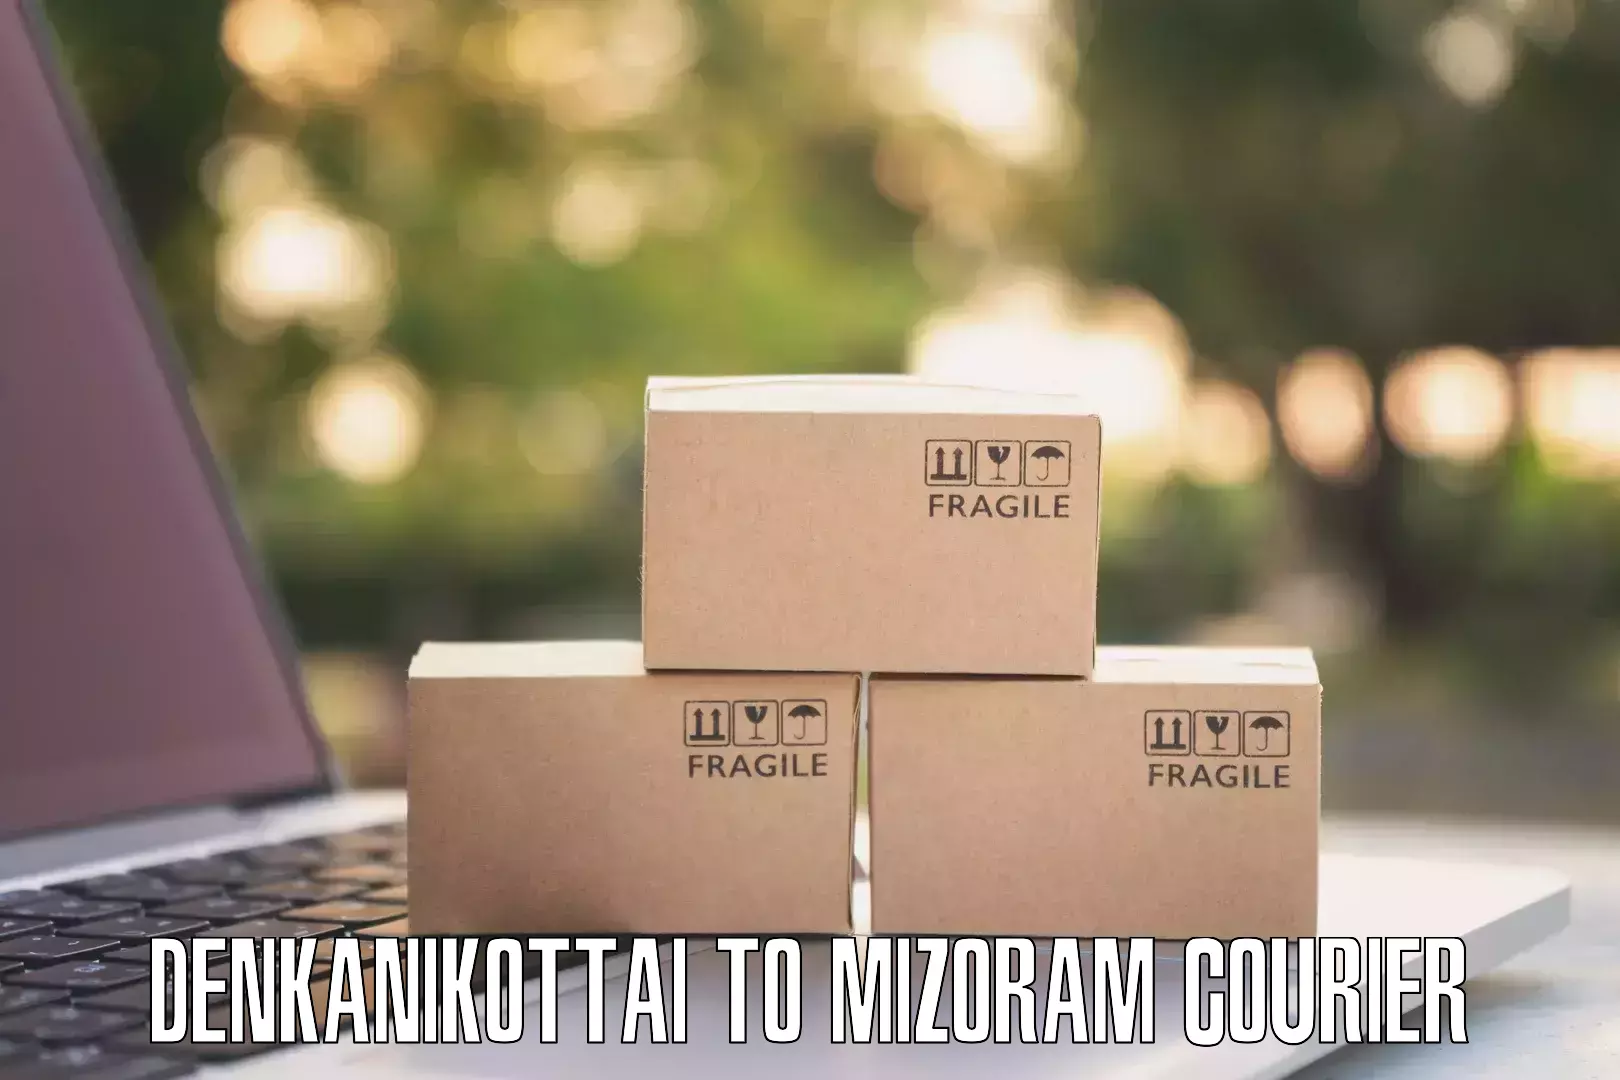 Custom courier packaging Denkanikottai to Lunglei